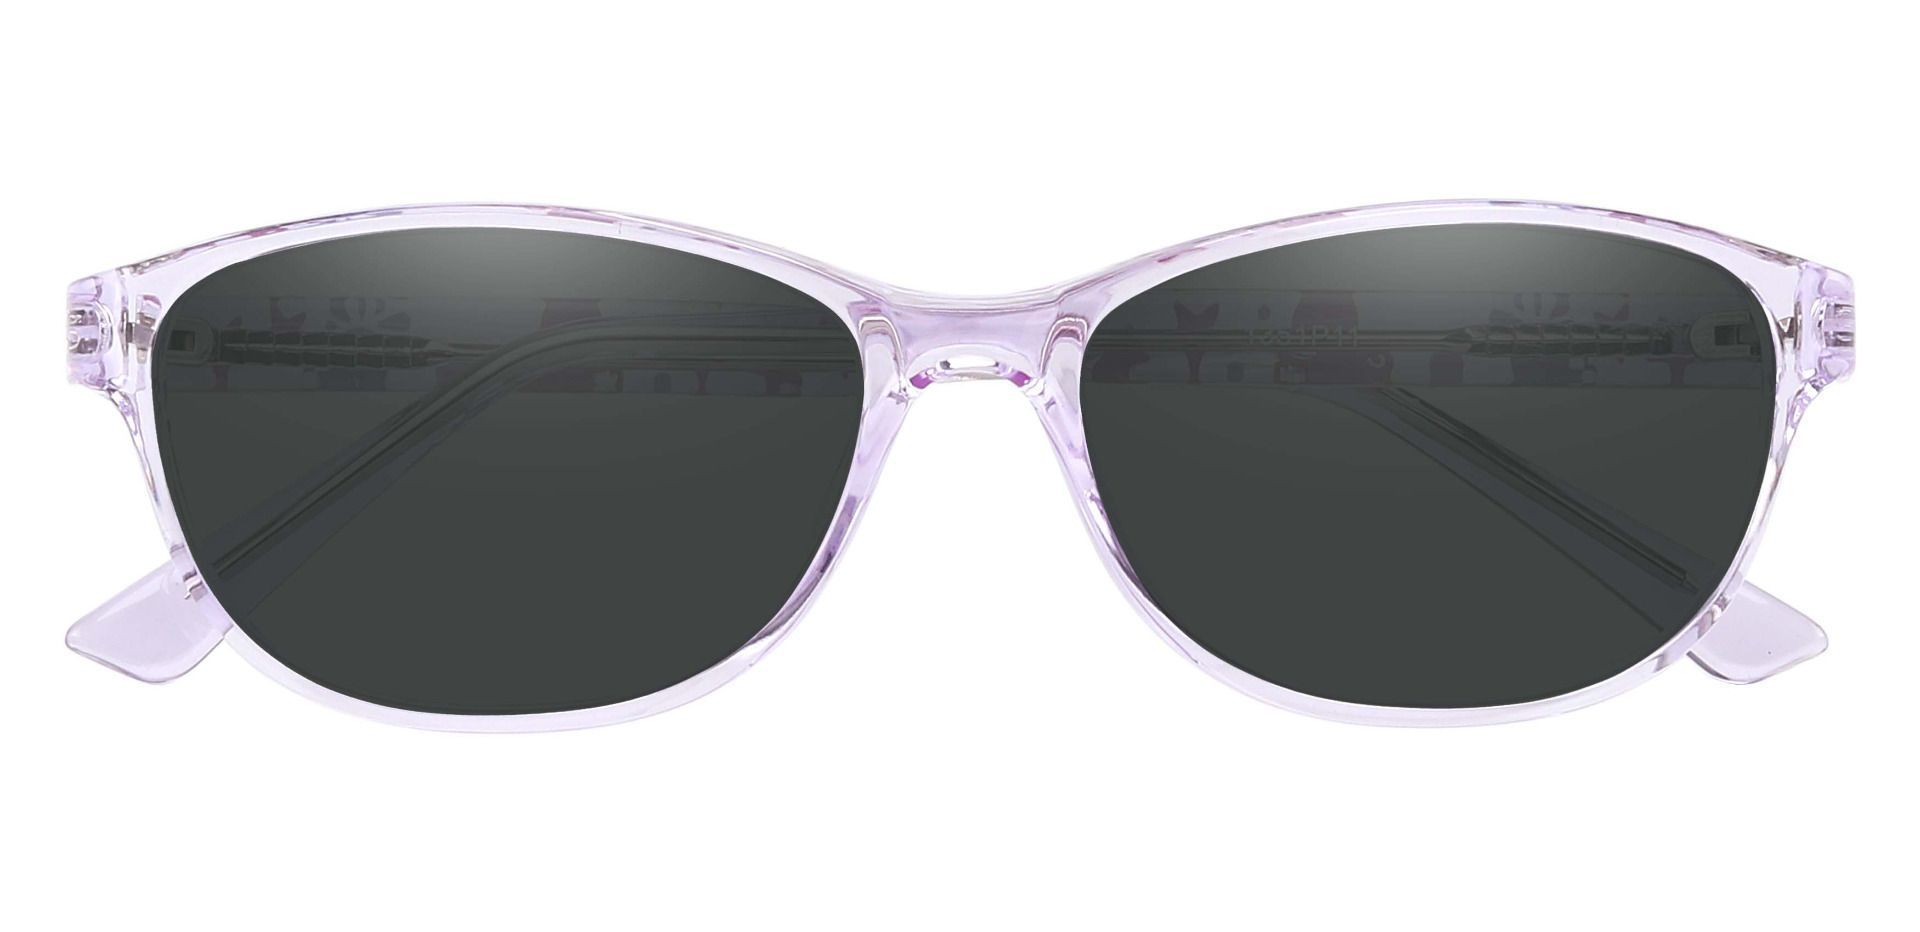 Patsy Oval Progressive Sunglasses - Purple Frame With Gray Lenses